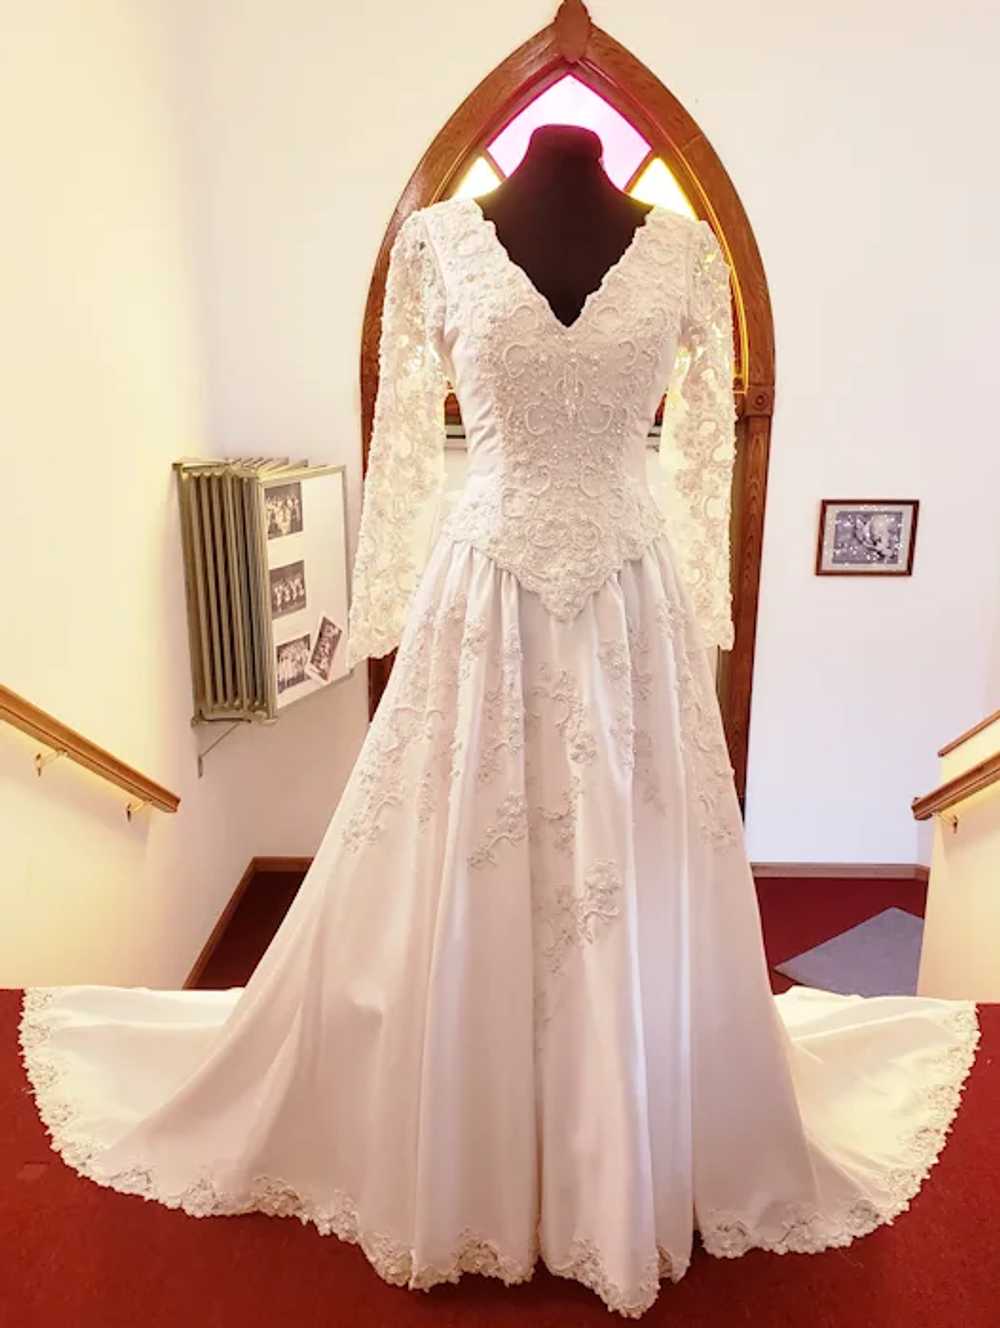 https://img.gem.app/678938491/3f/1682206561/pearls-bows-and-lace-stunning-satin-wedding-dress.jpg